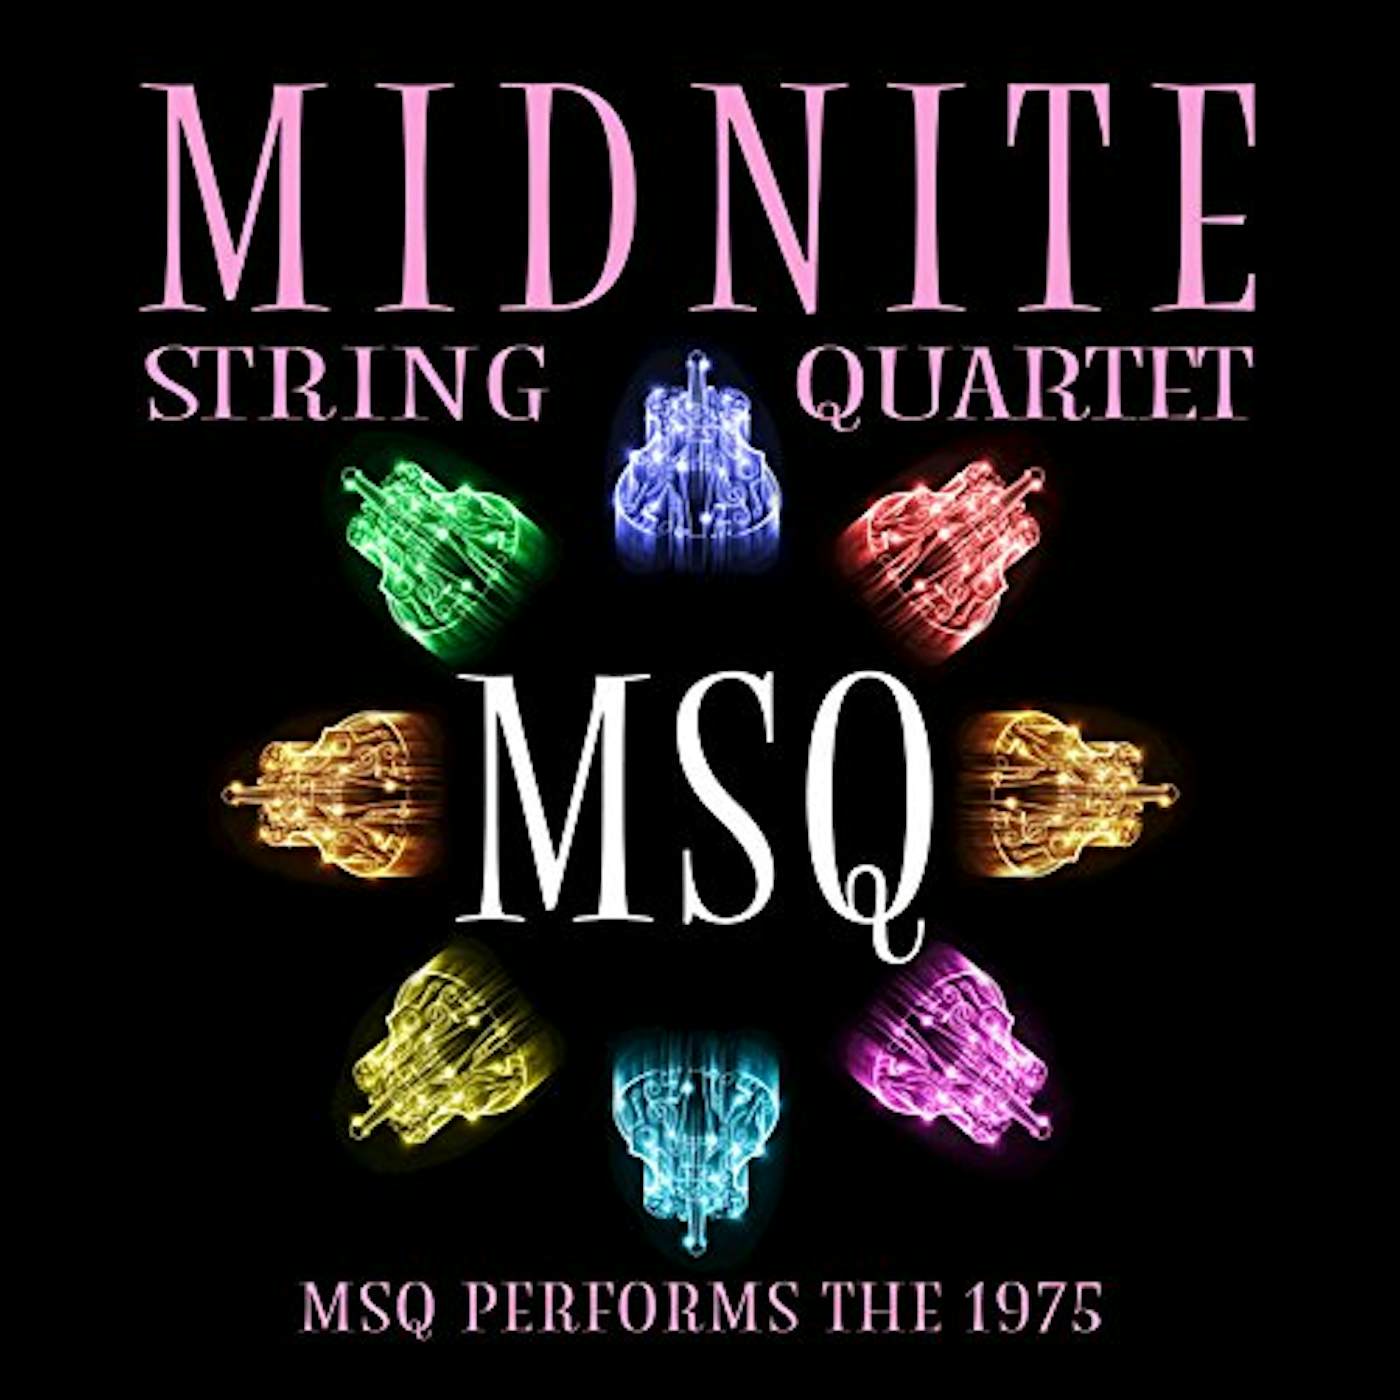 Midnite String Quartet MSQ PERFORMS THE 1975 (MOD) CD